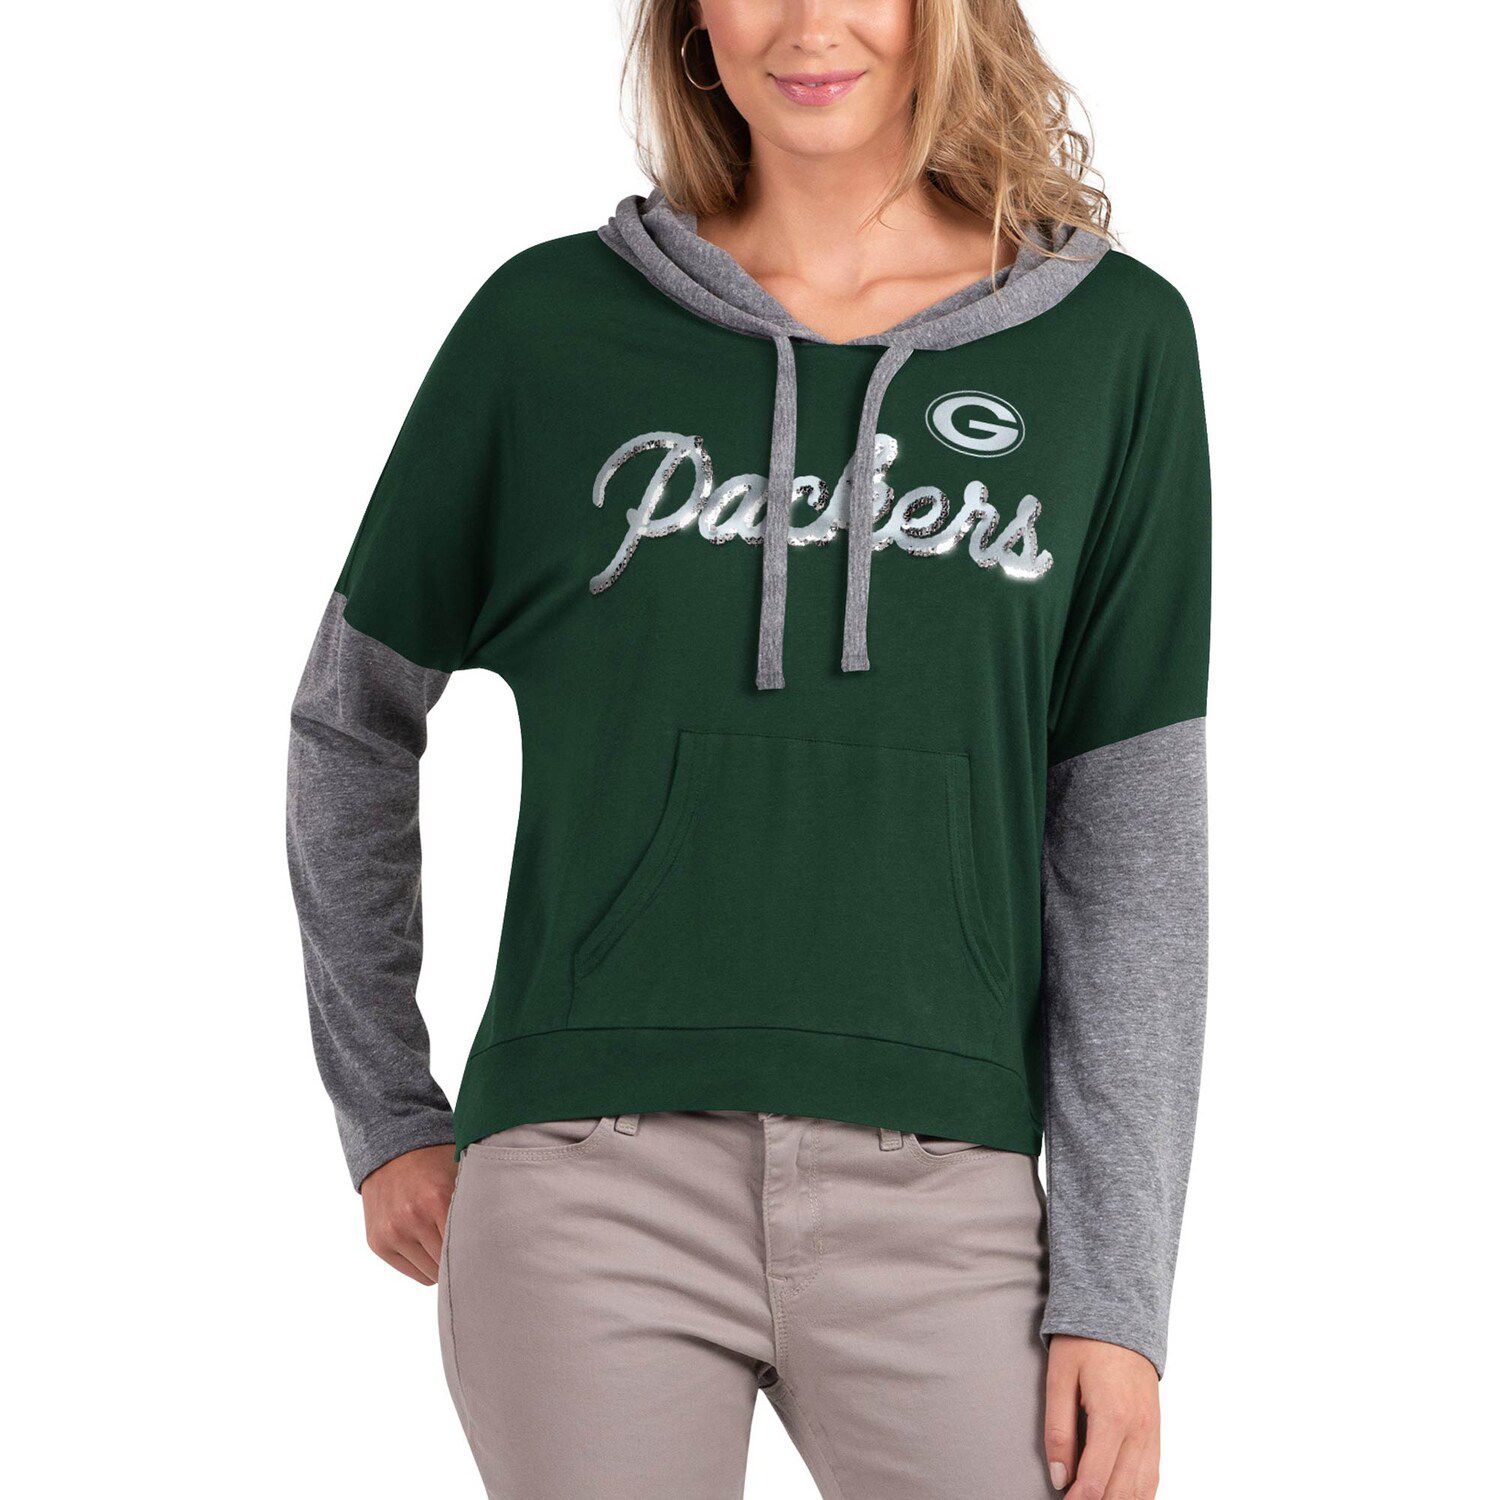 kohls green bay packers sweatshirt